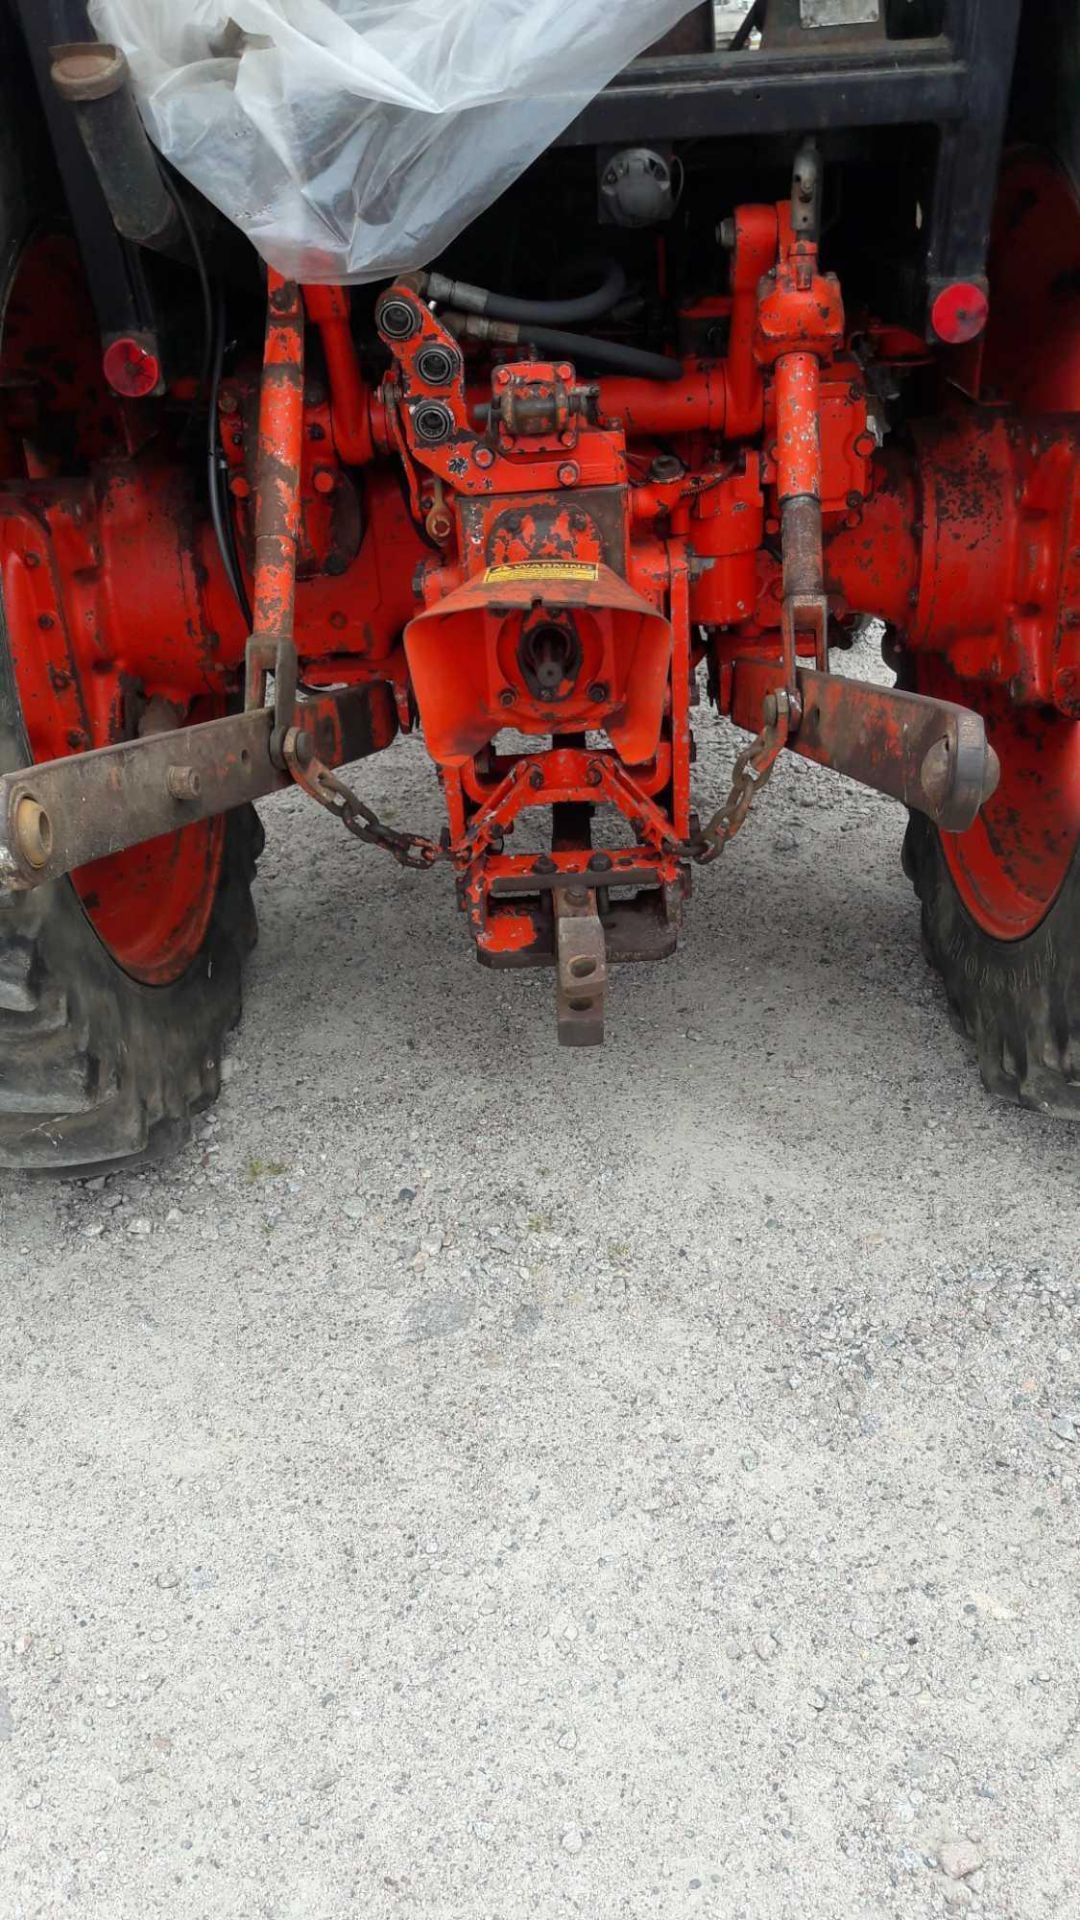 David Brown 1390 - 0cc Tractor - Image 5 of 5